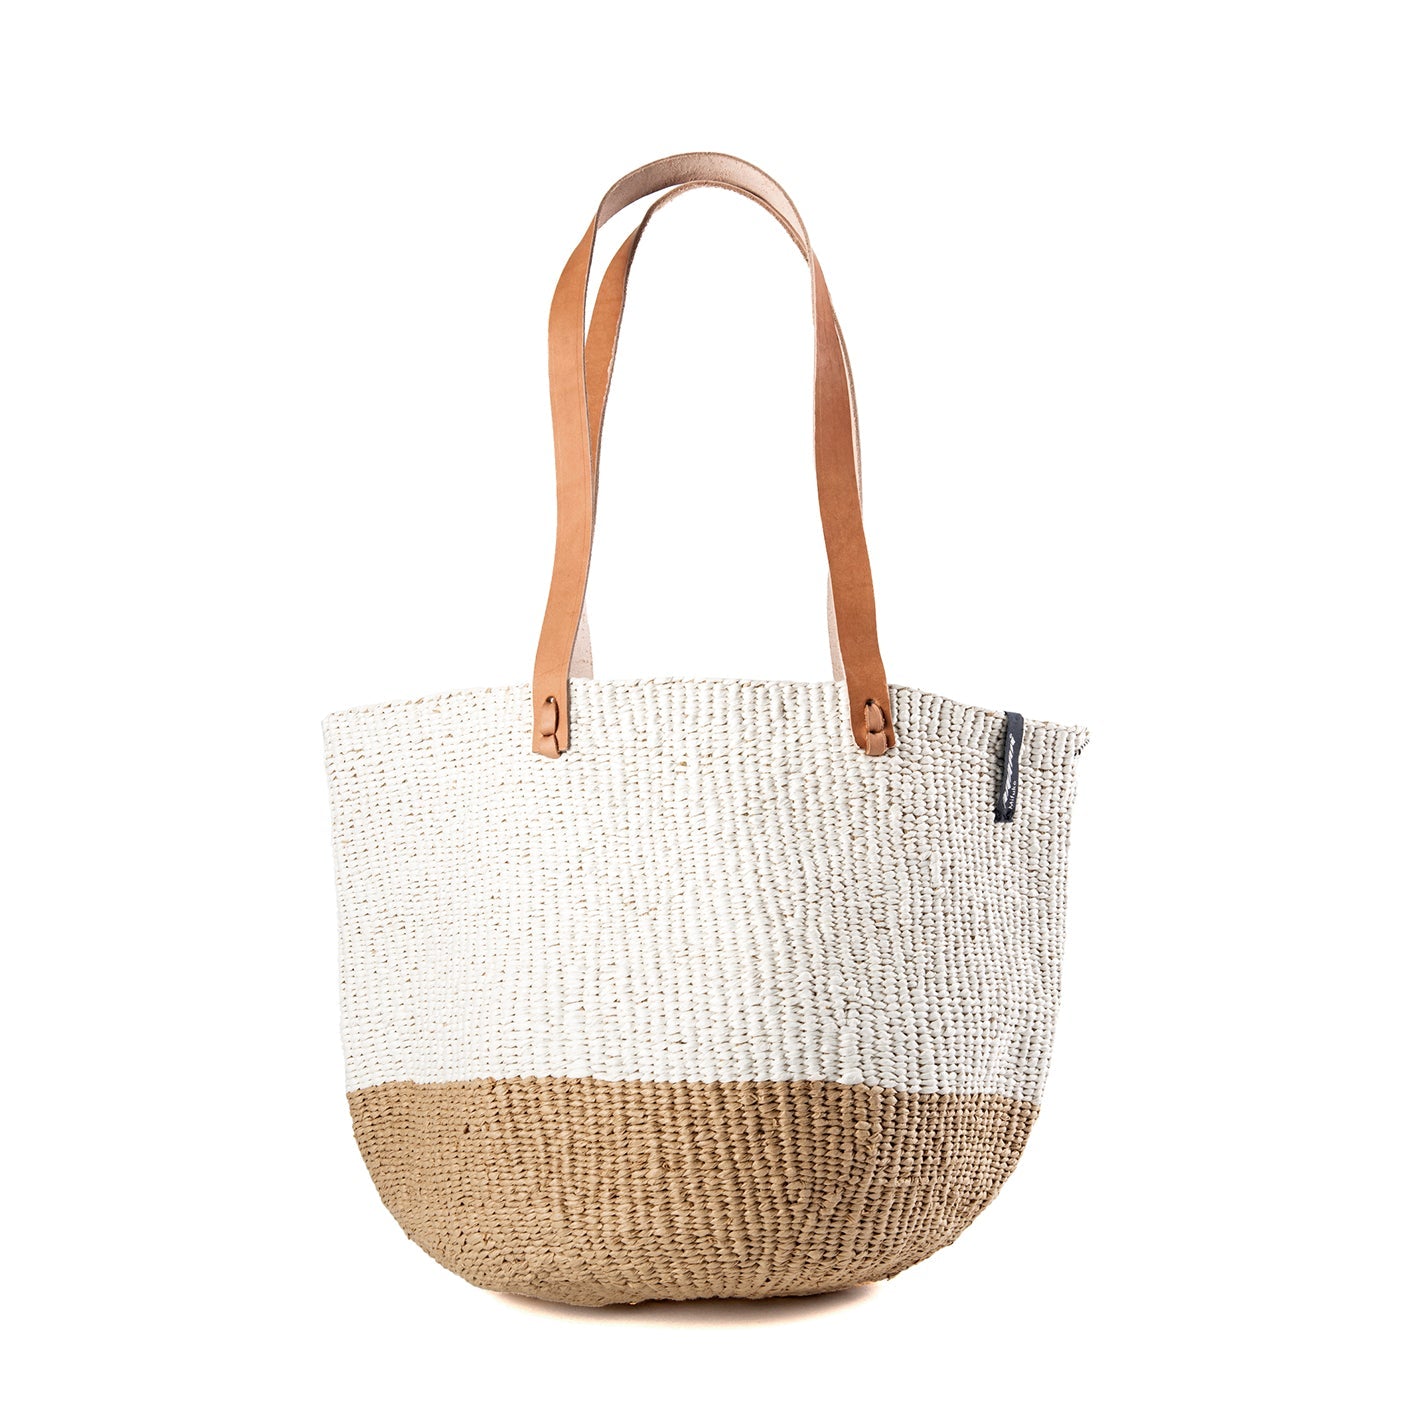 Kiondo shopper basket | White and brown duo M